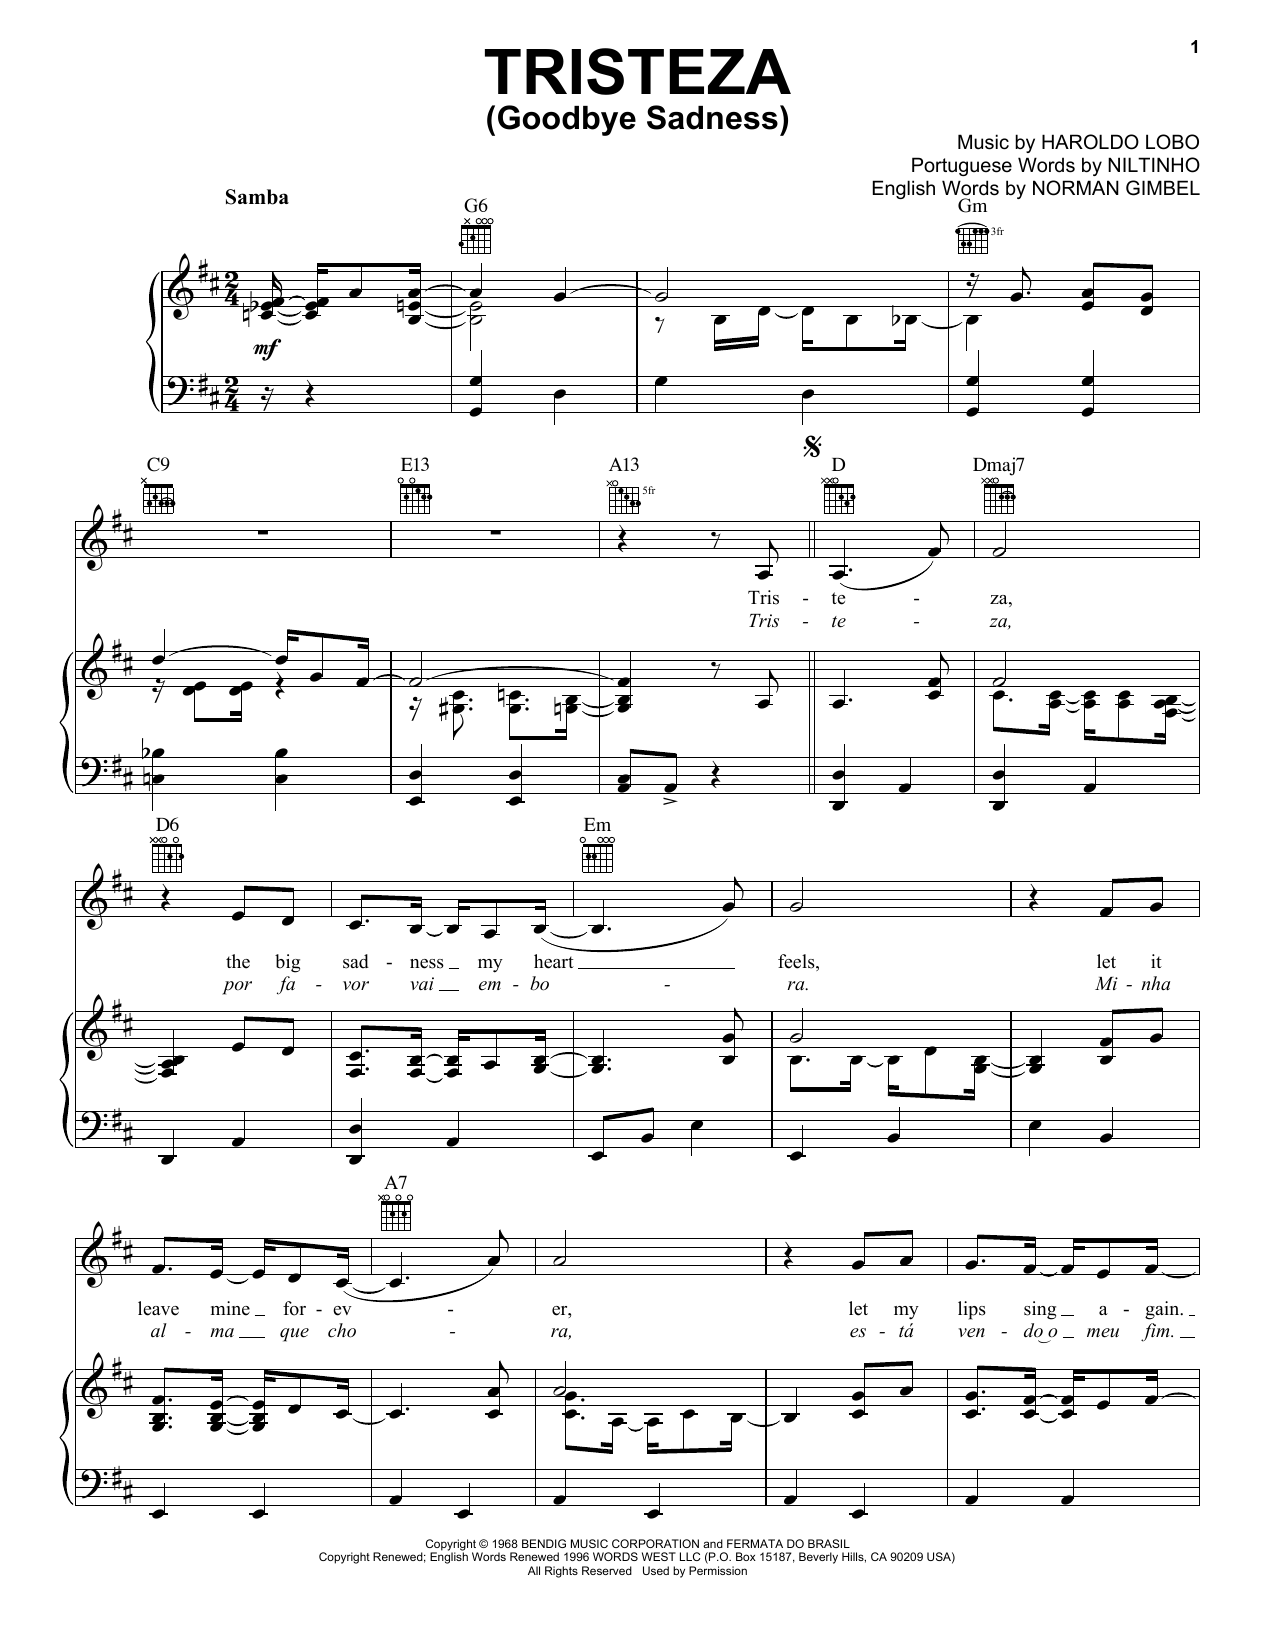 Niltinho Tristeza (Goodbye Sadness) Sheet Music Notes & Chords for Real Book – Melody & Chords - Download or Print PDF